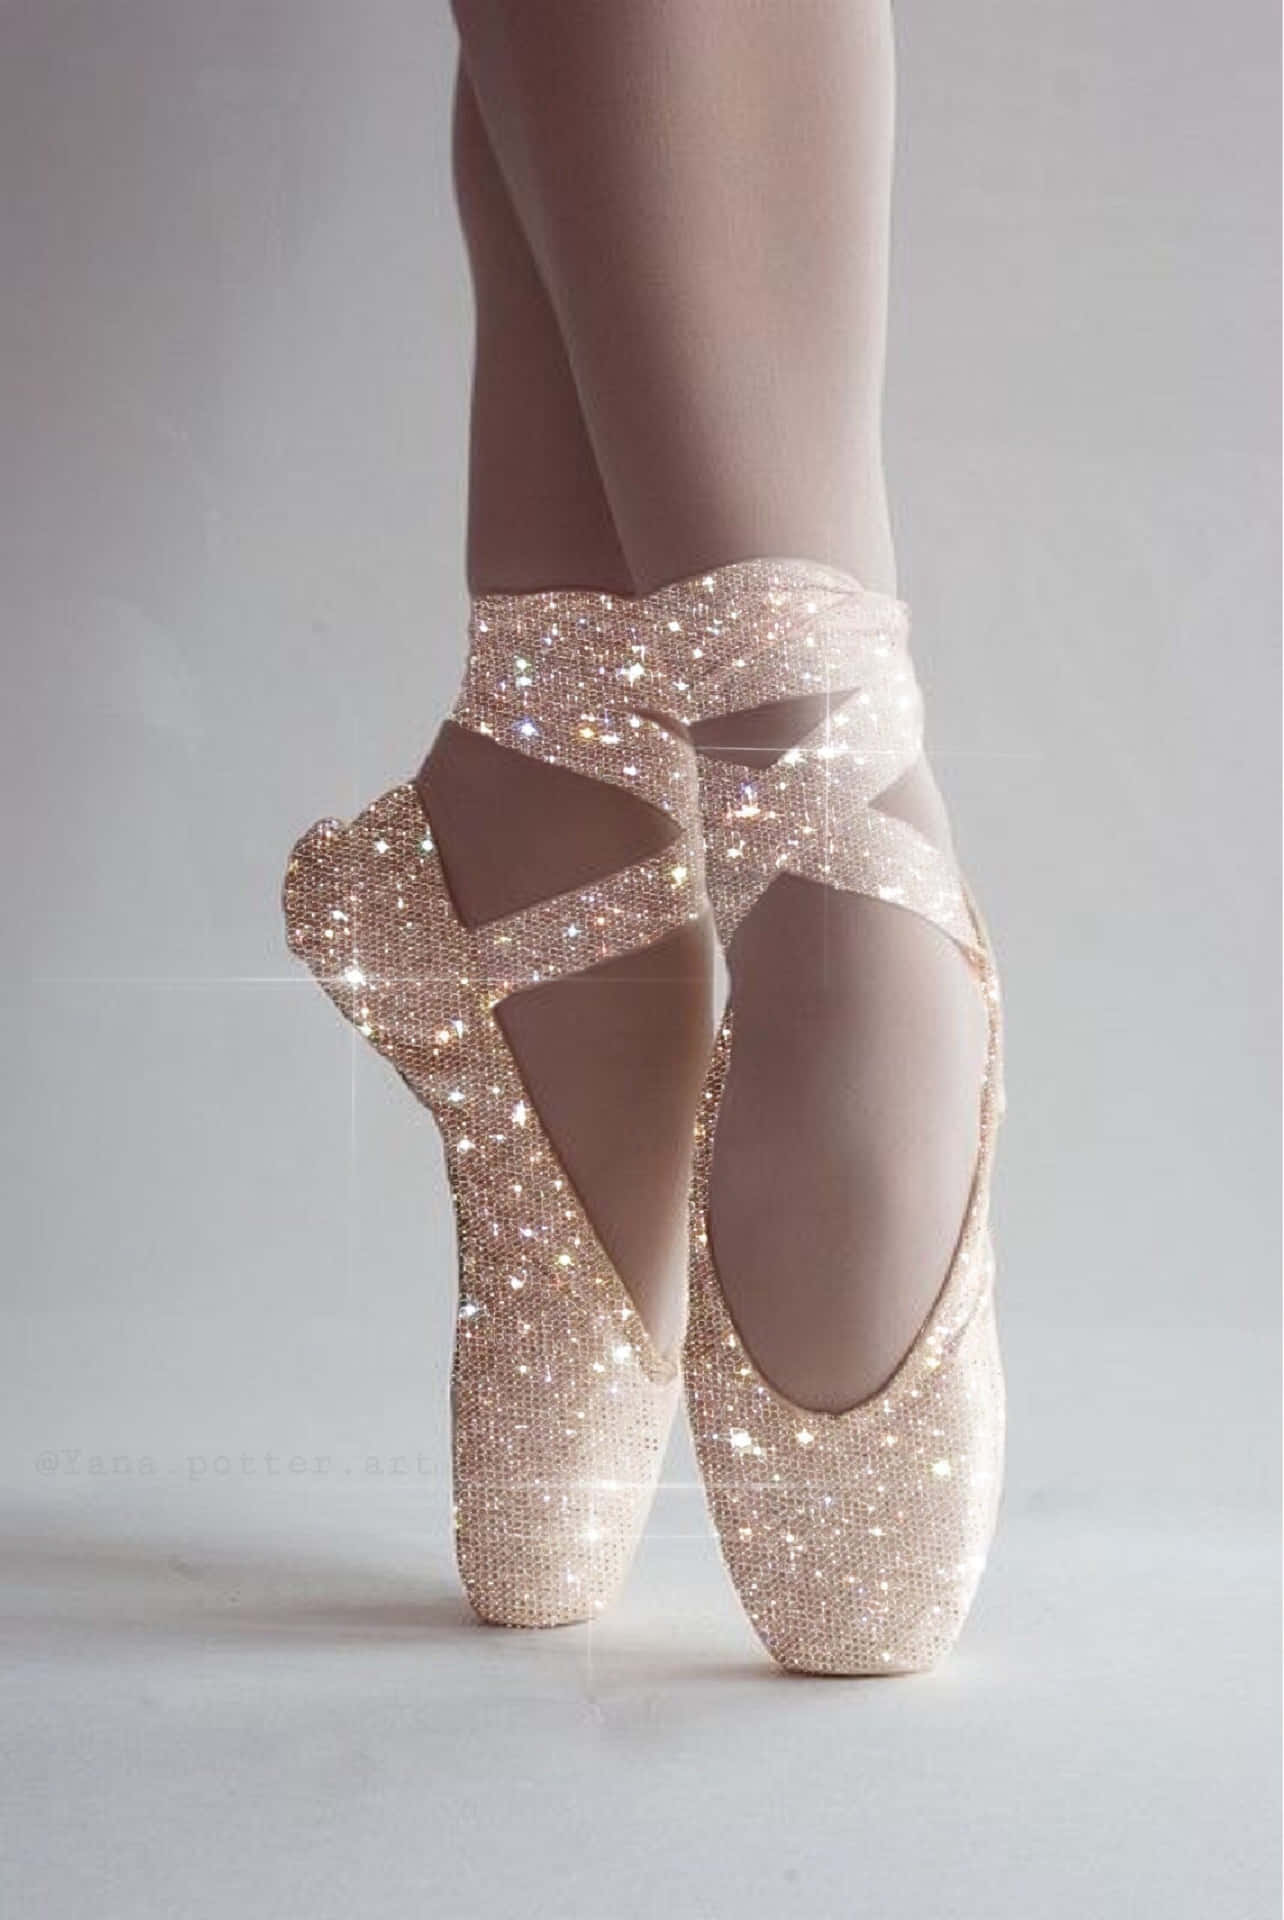 A Woman's Feet In A Pair Of Glitter Ballet Shoes Wallpaper